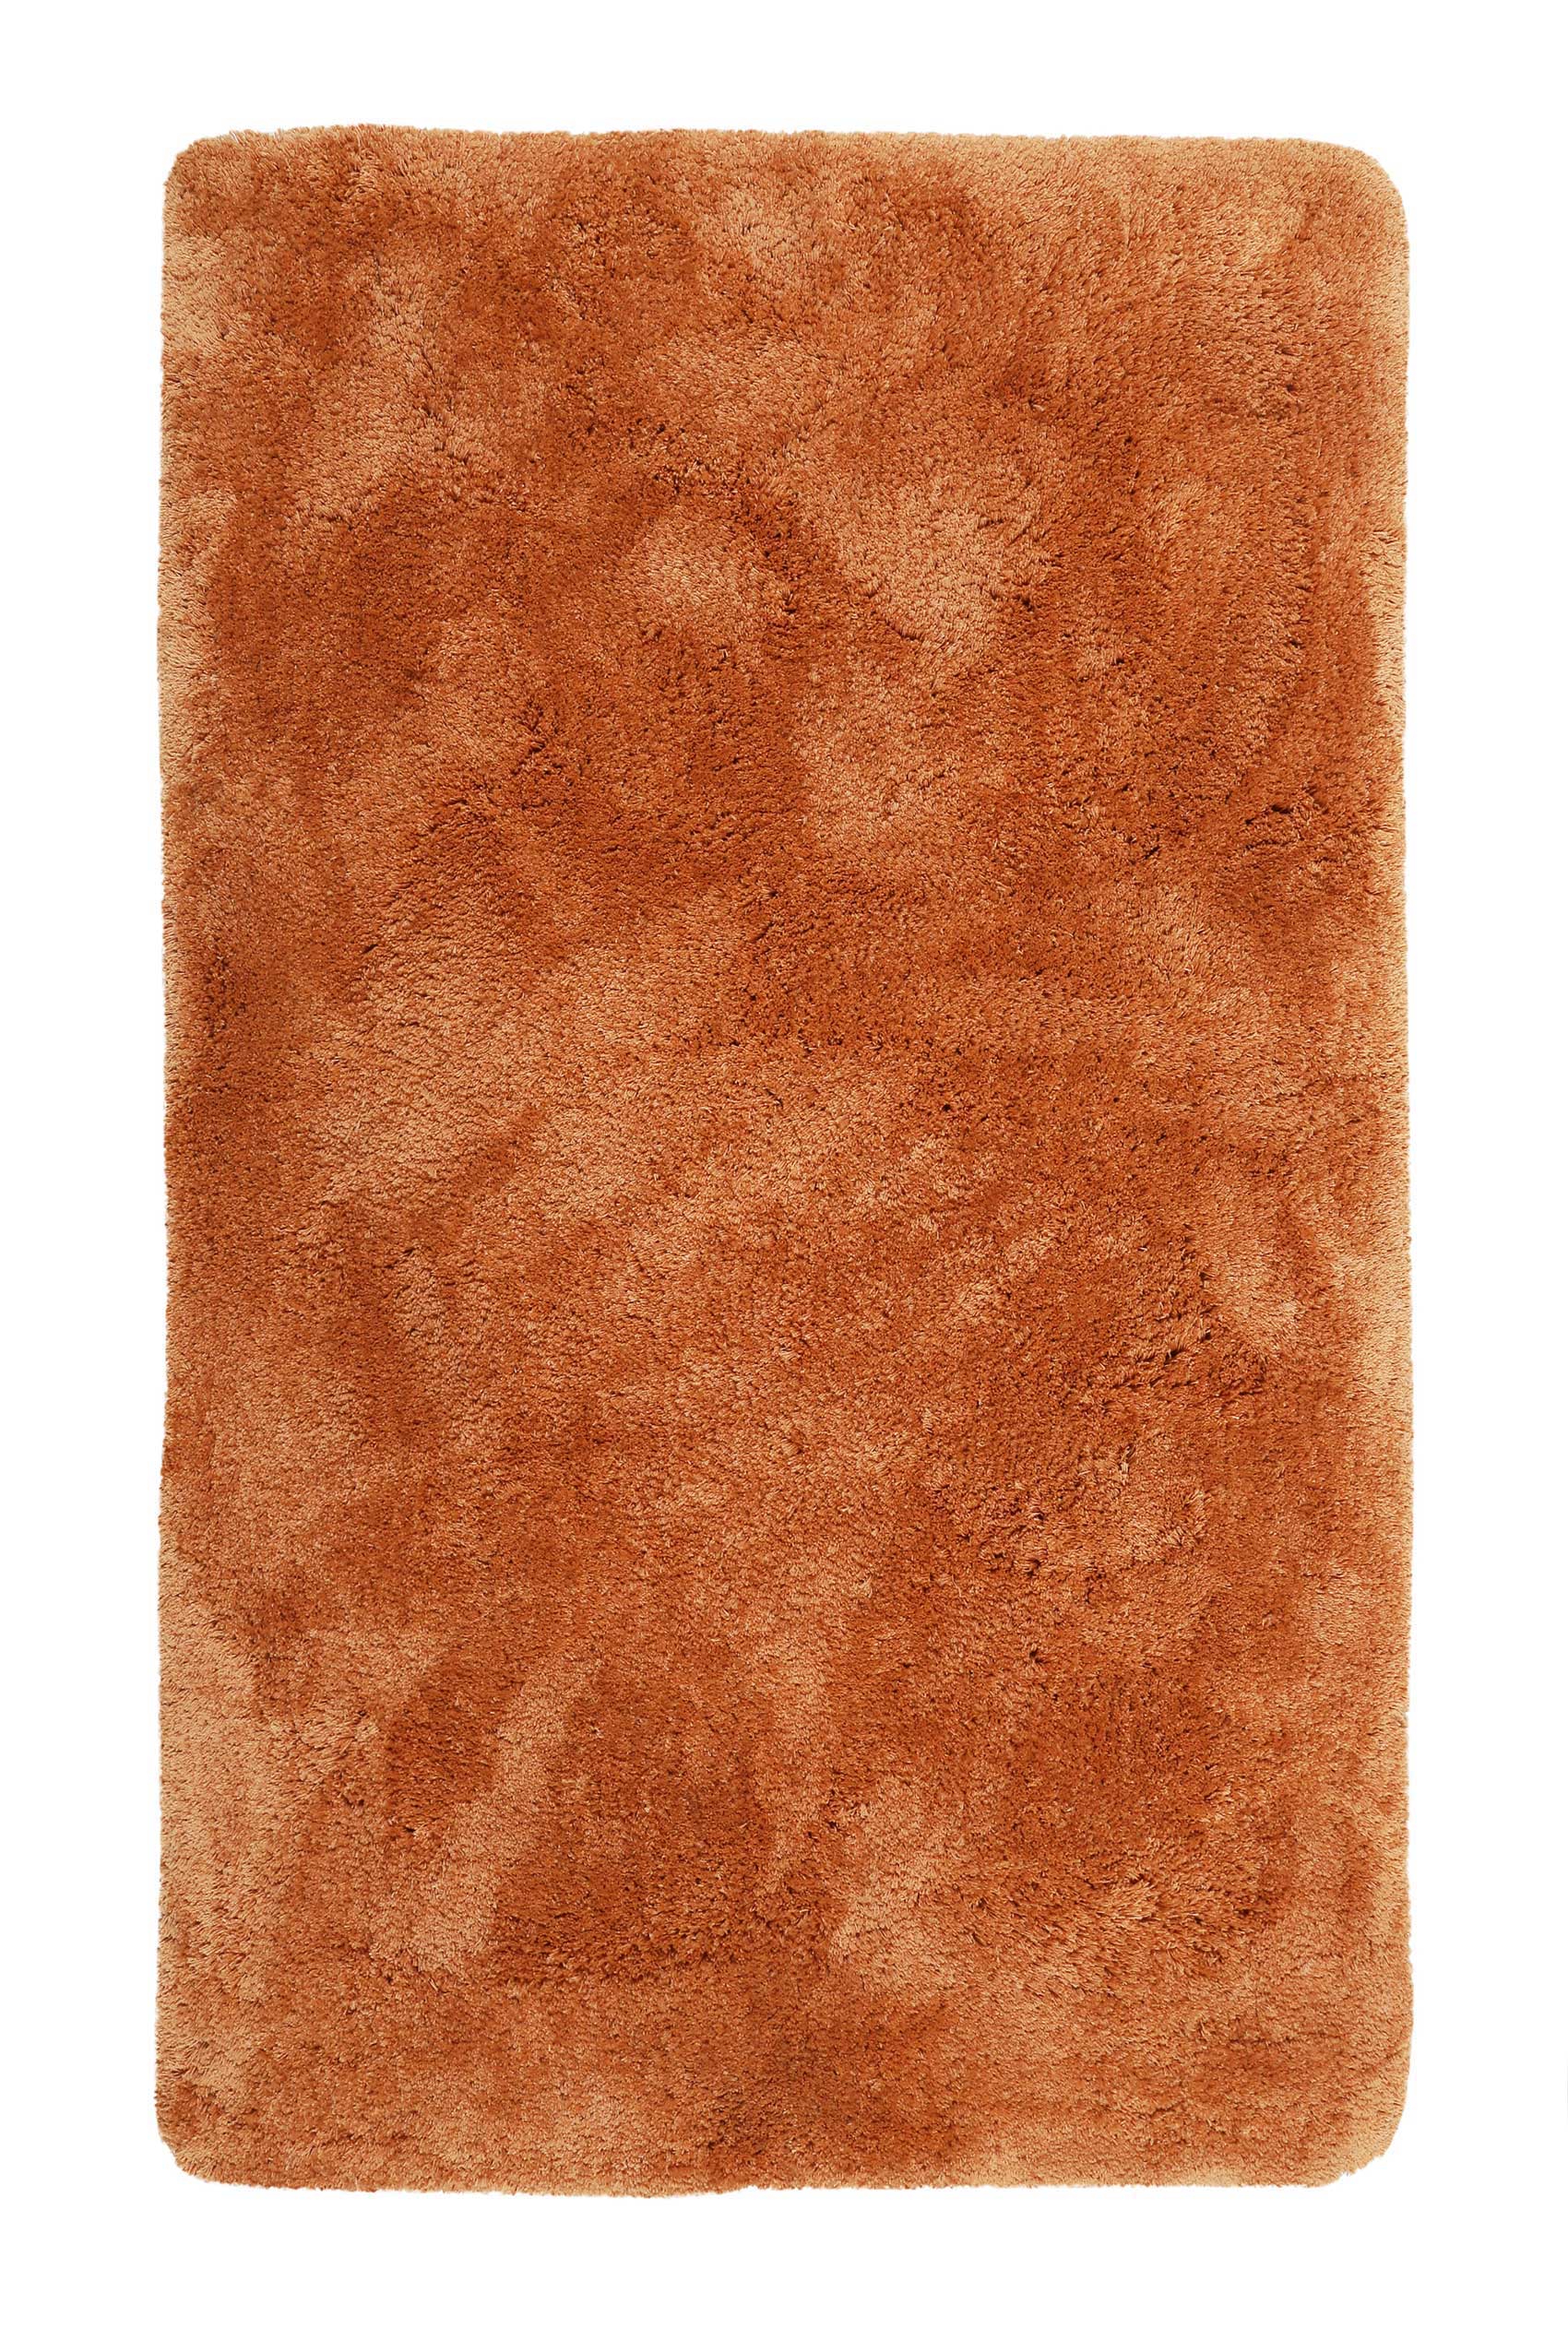 tapis de bain microfibre antidérapant terracotta 55x65